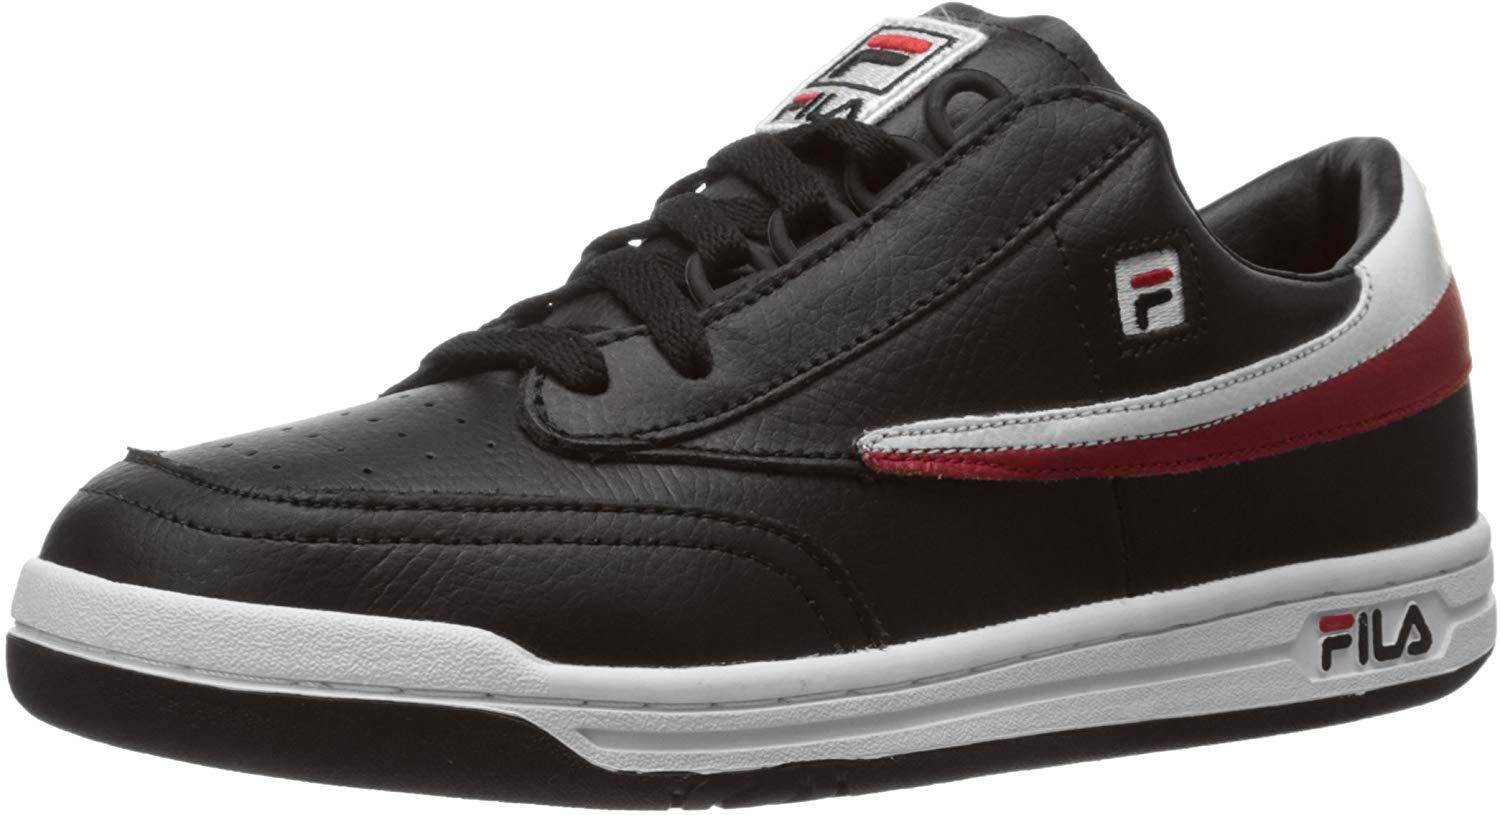 Fila Leather Original Tennis Fashion Sneaker in Black / White / Red (Black)  for Men - Lyst